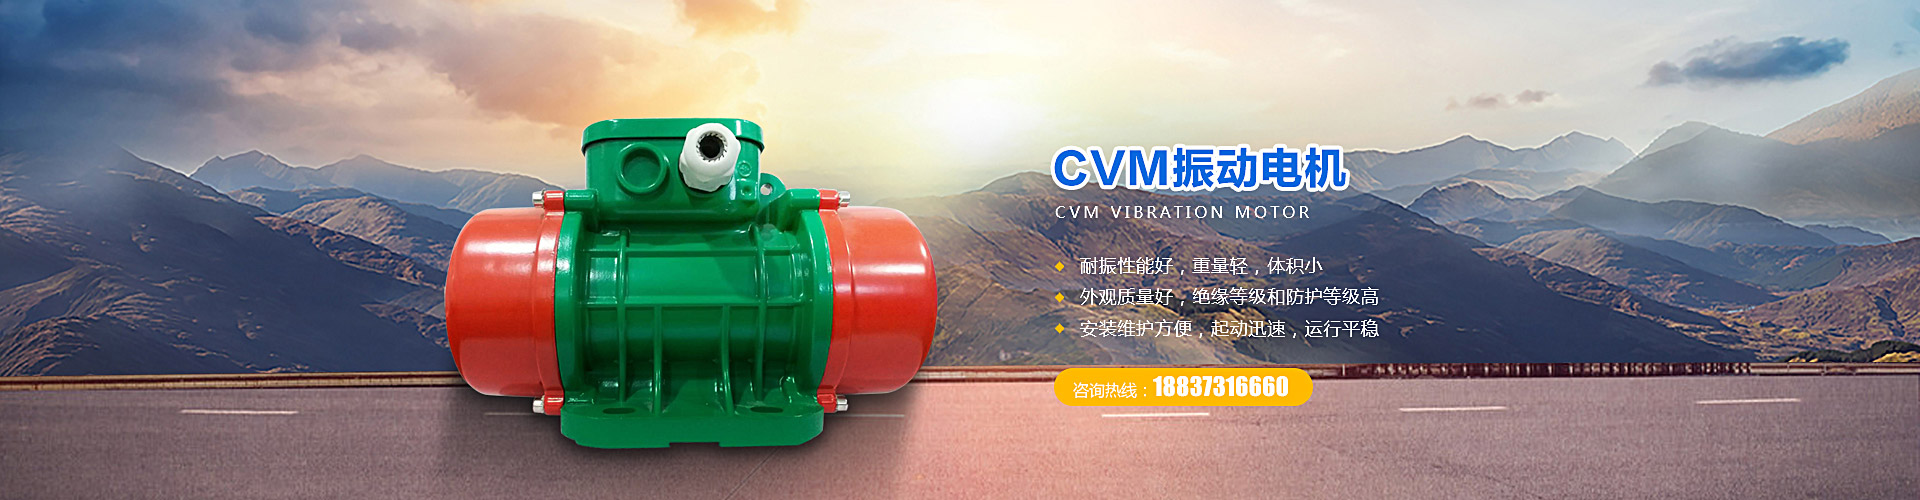 CVM振動電機